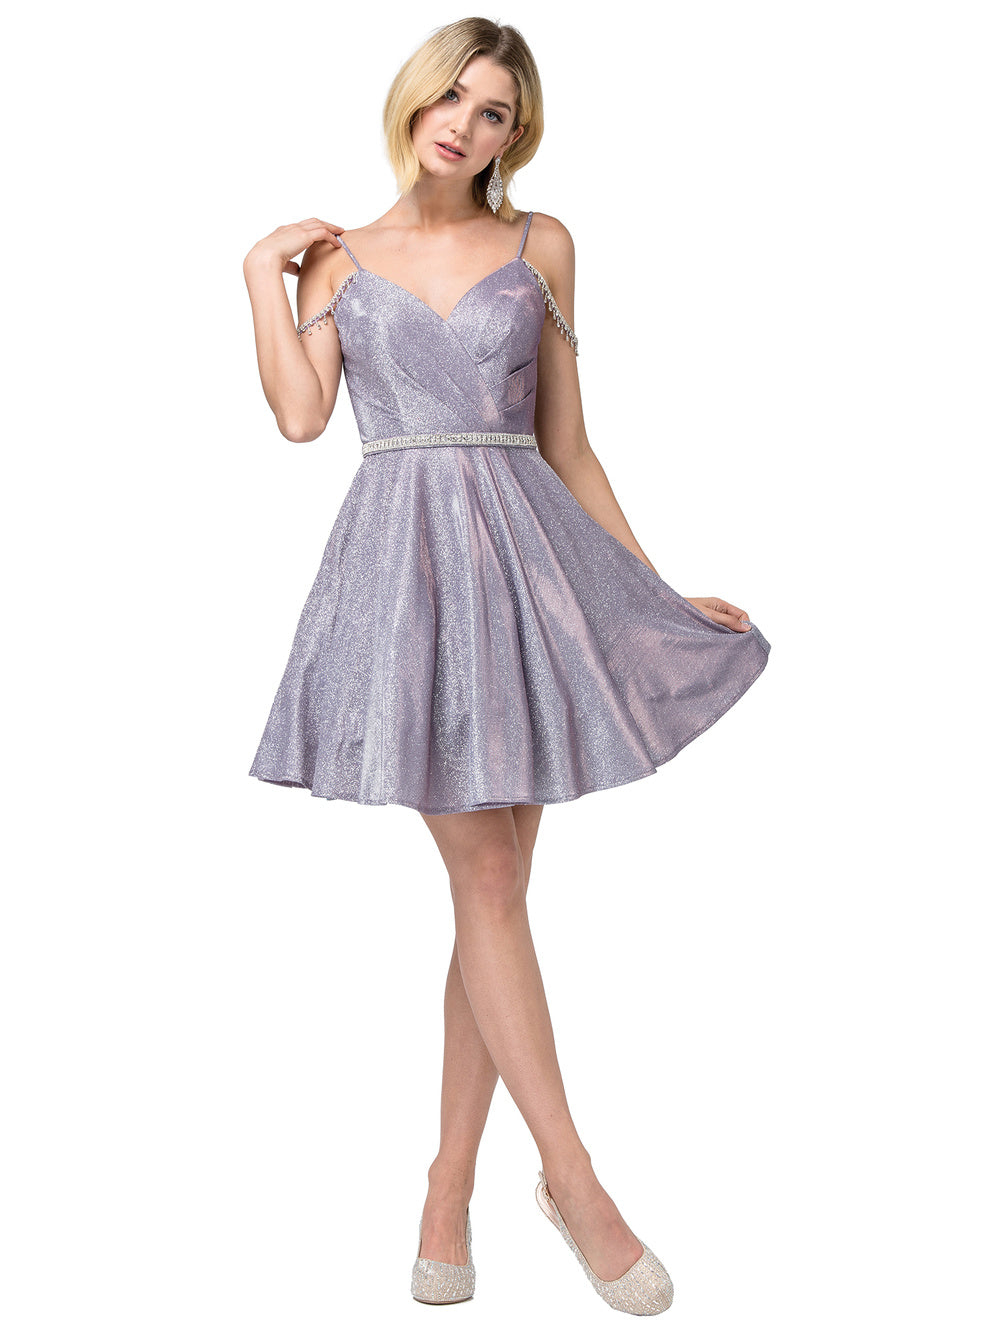 Dancing Queen 3173 Short Dress Size XXL (14) Fit & Flare